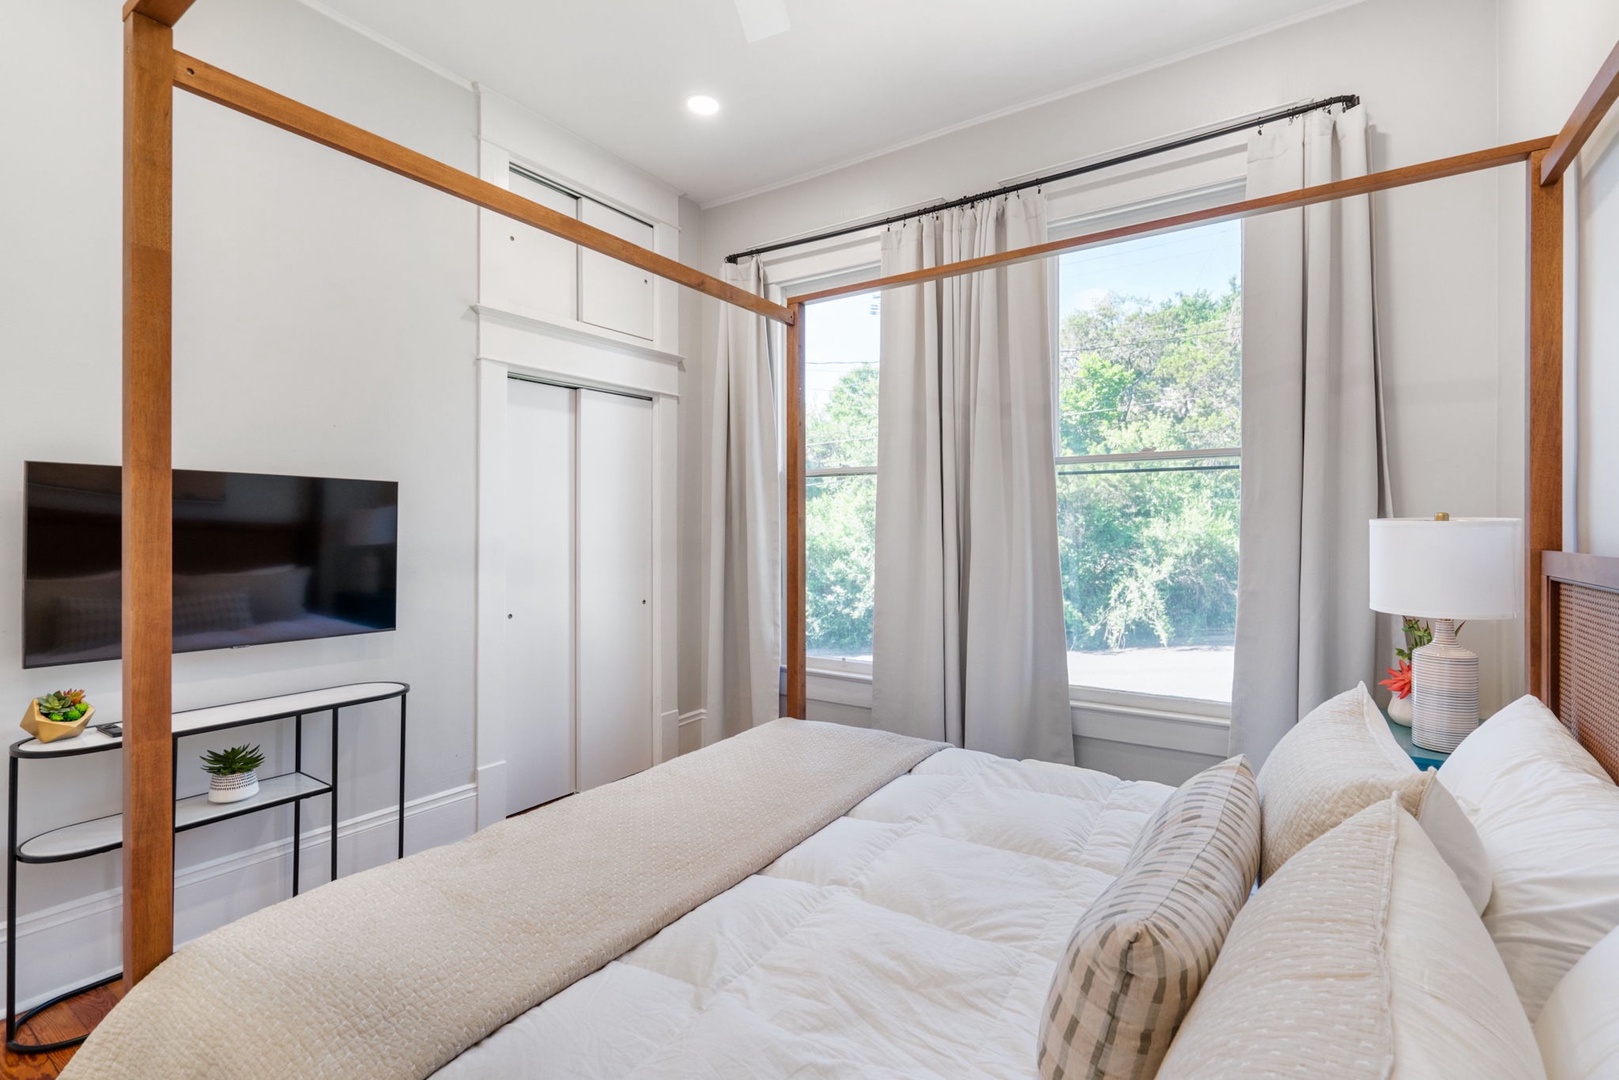 A regal king-sized bed & Smart TV await in the final bedroom retreat